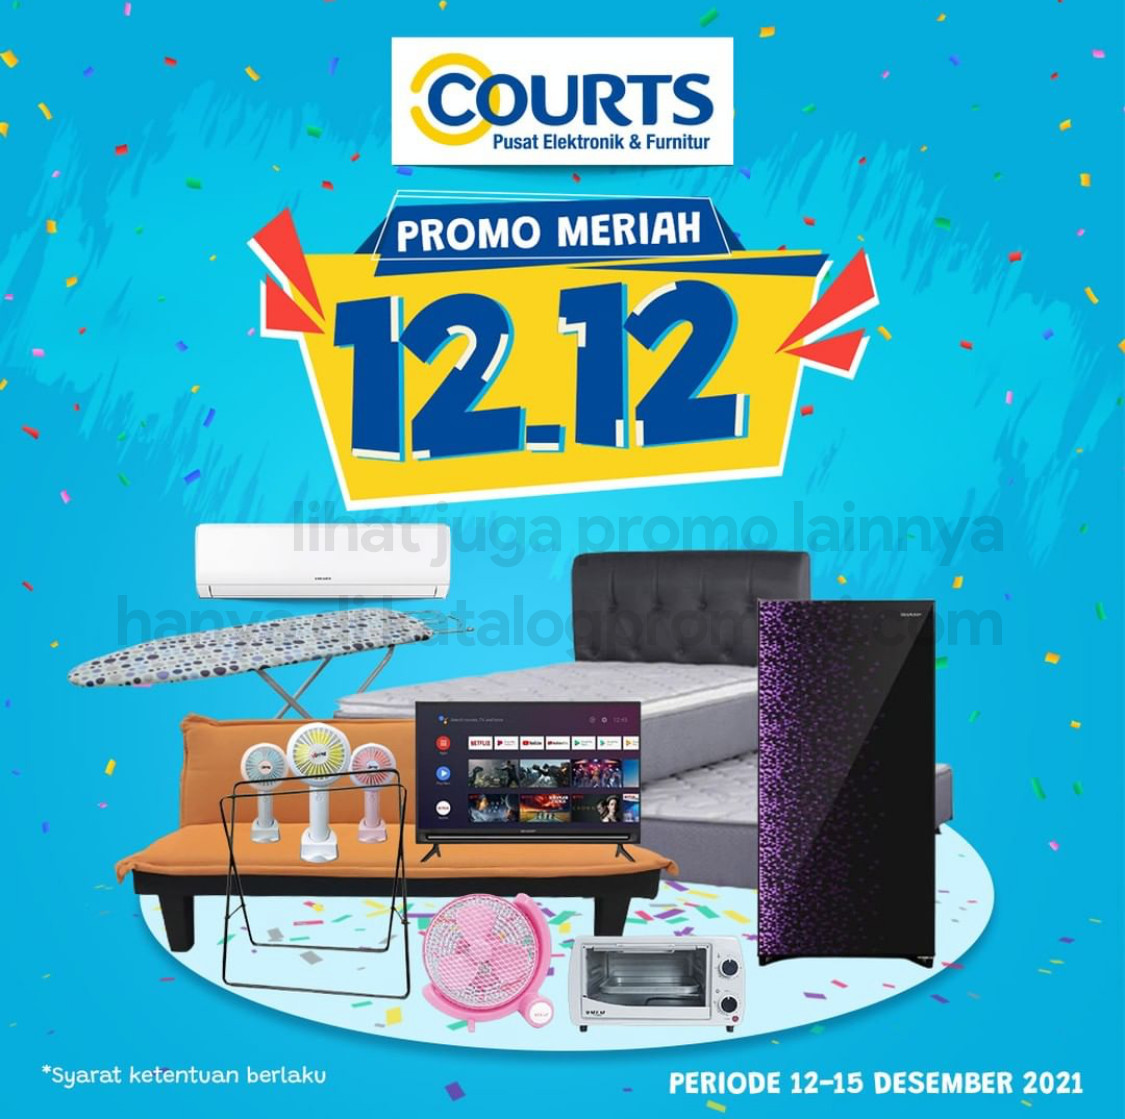 PROMO COUTRS MERIAH 12.12 - Dapatkan VOUCHER POTONGAN LANGSUNG Rp. 12.000